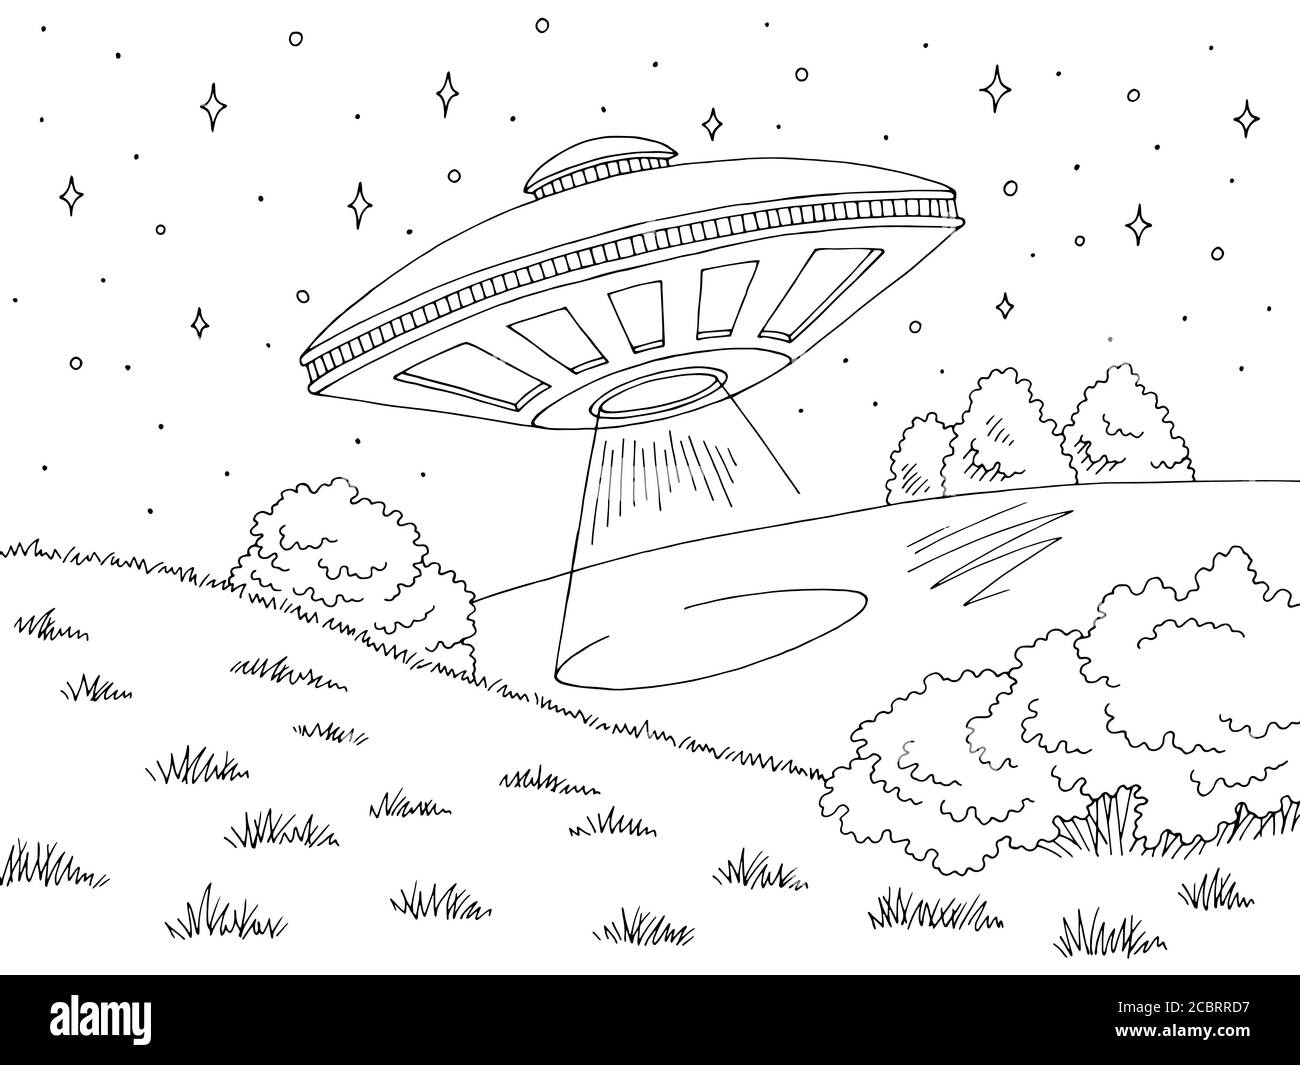 UFO fliegen über Hügel Grafik schwarz weiß Landschaft Skizze Illustration vektor Stock Vektor